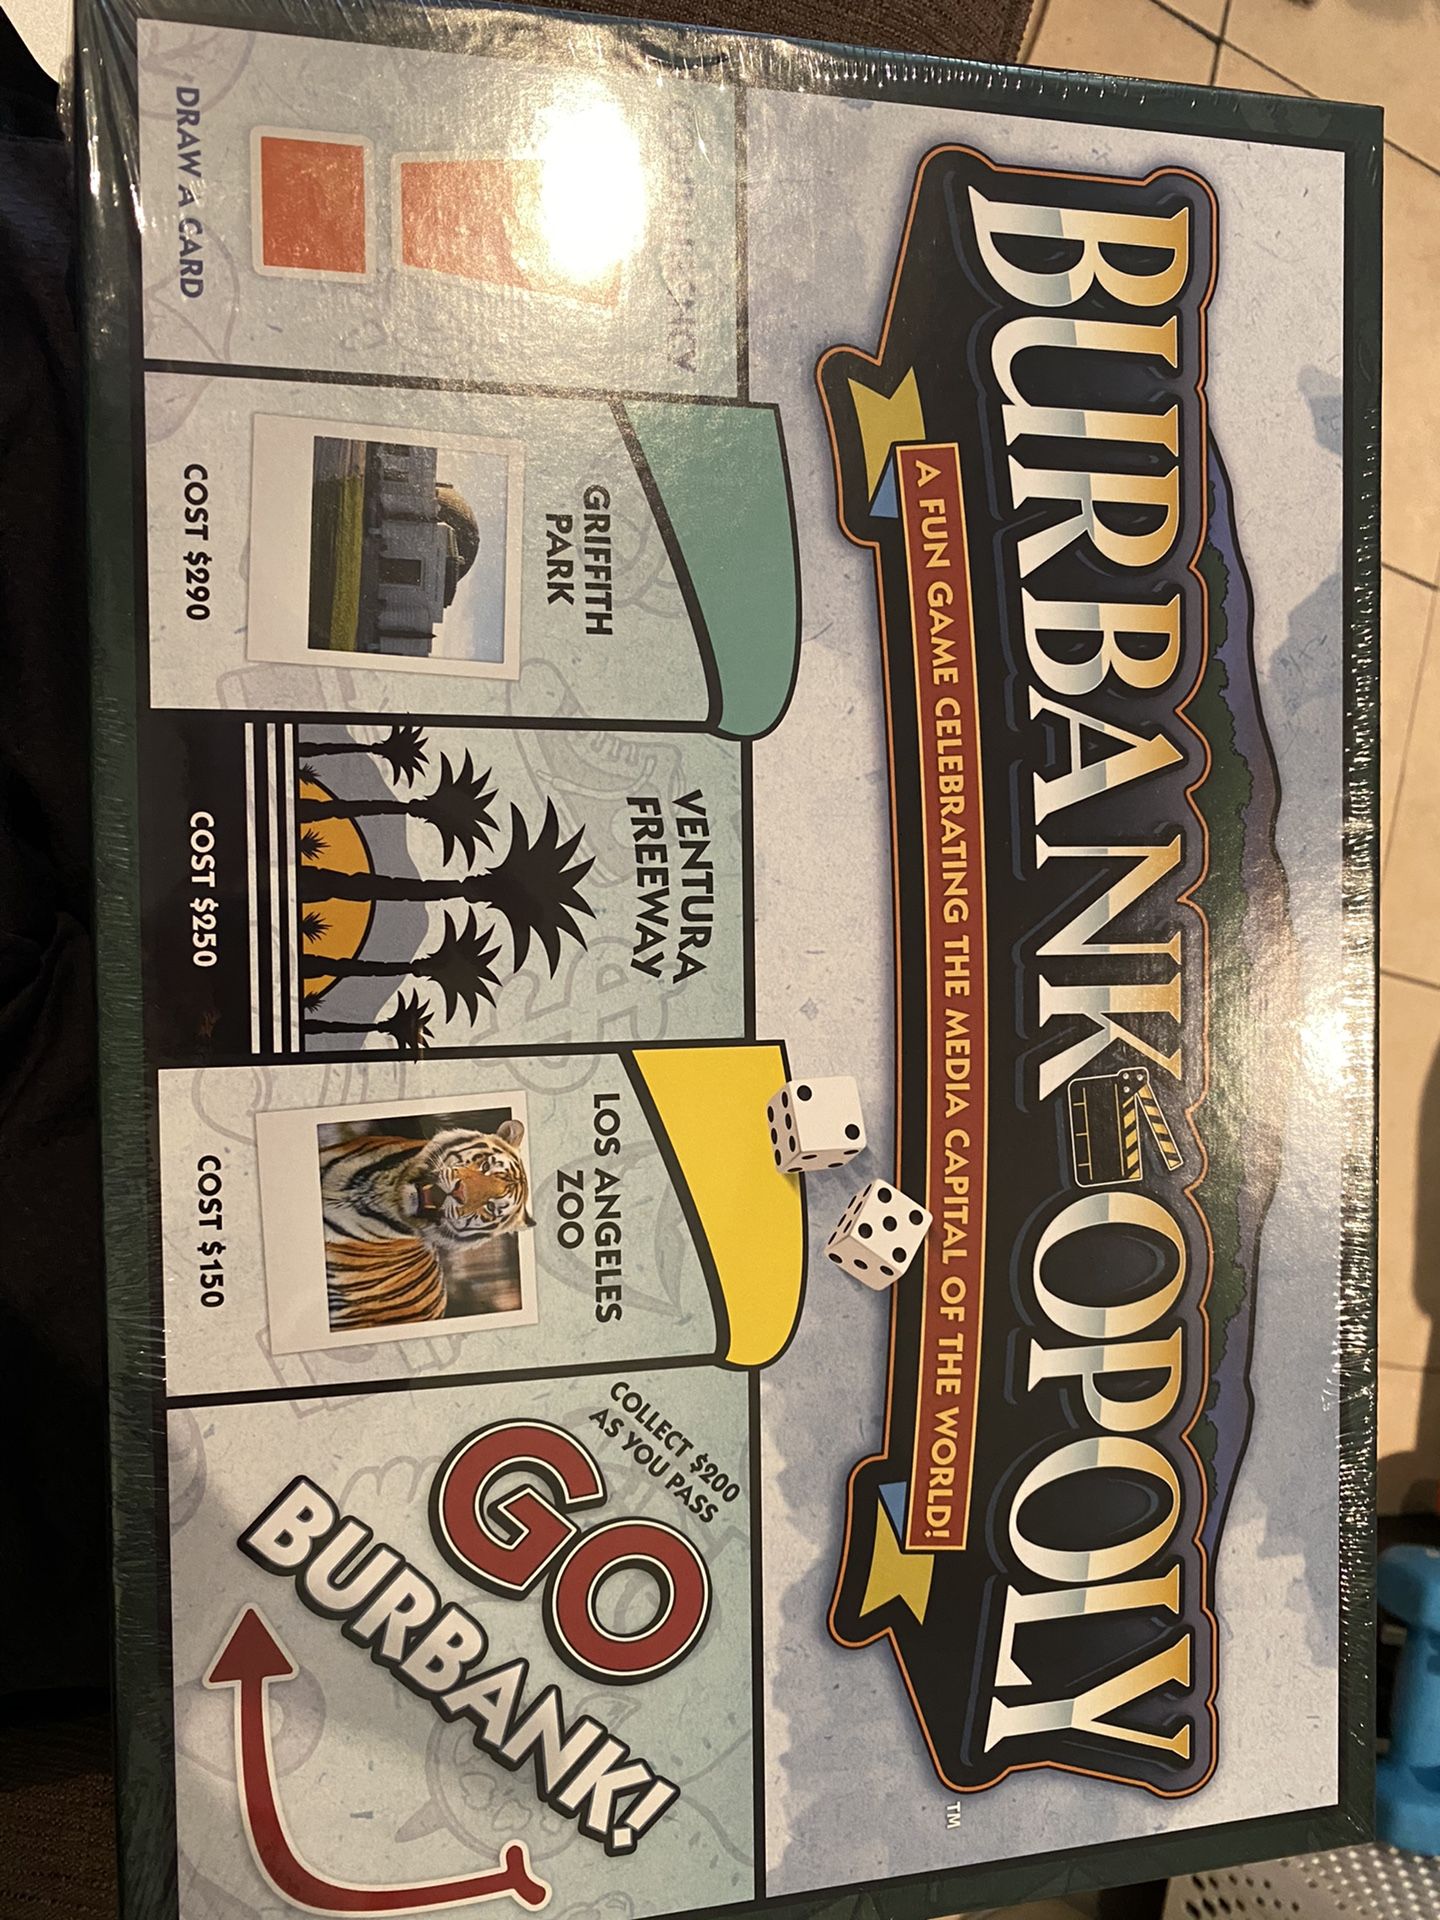 Monopoly - Burbank California edition.